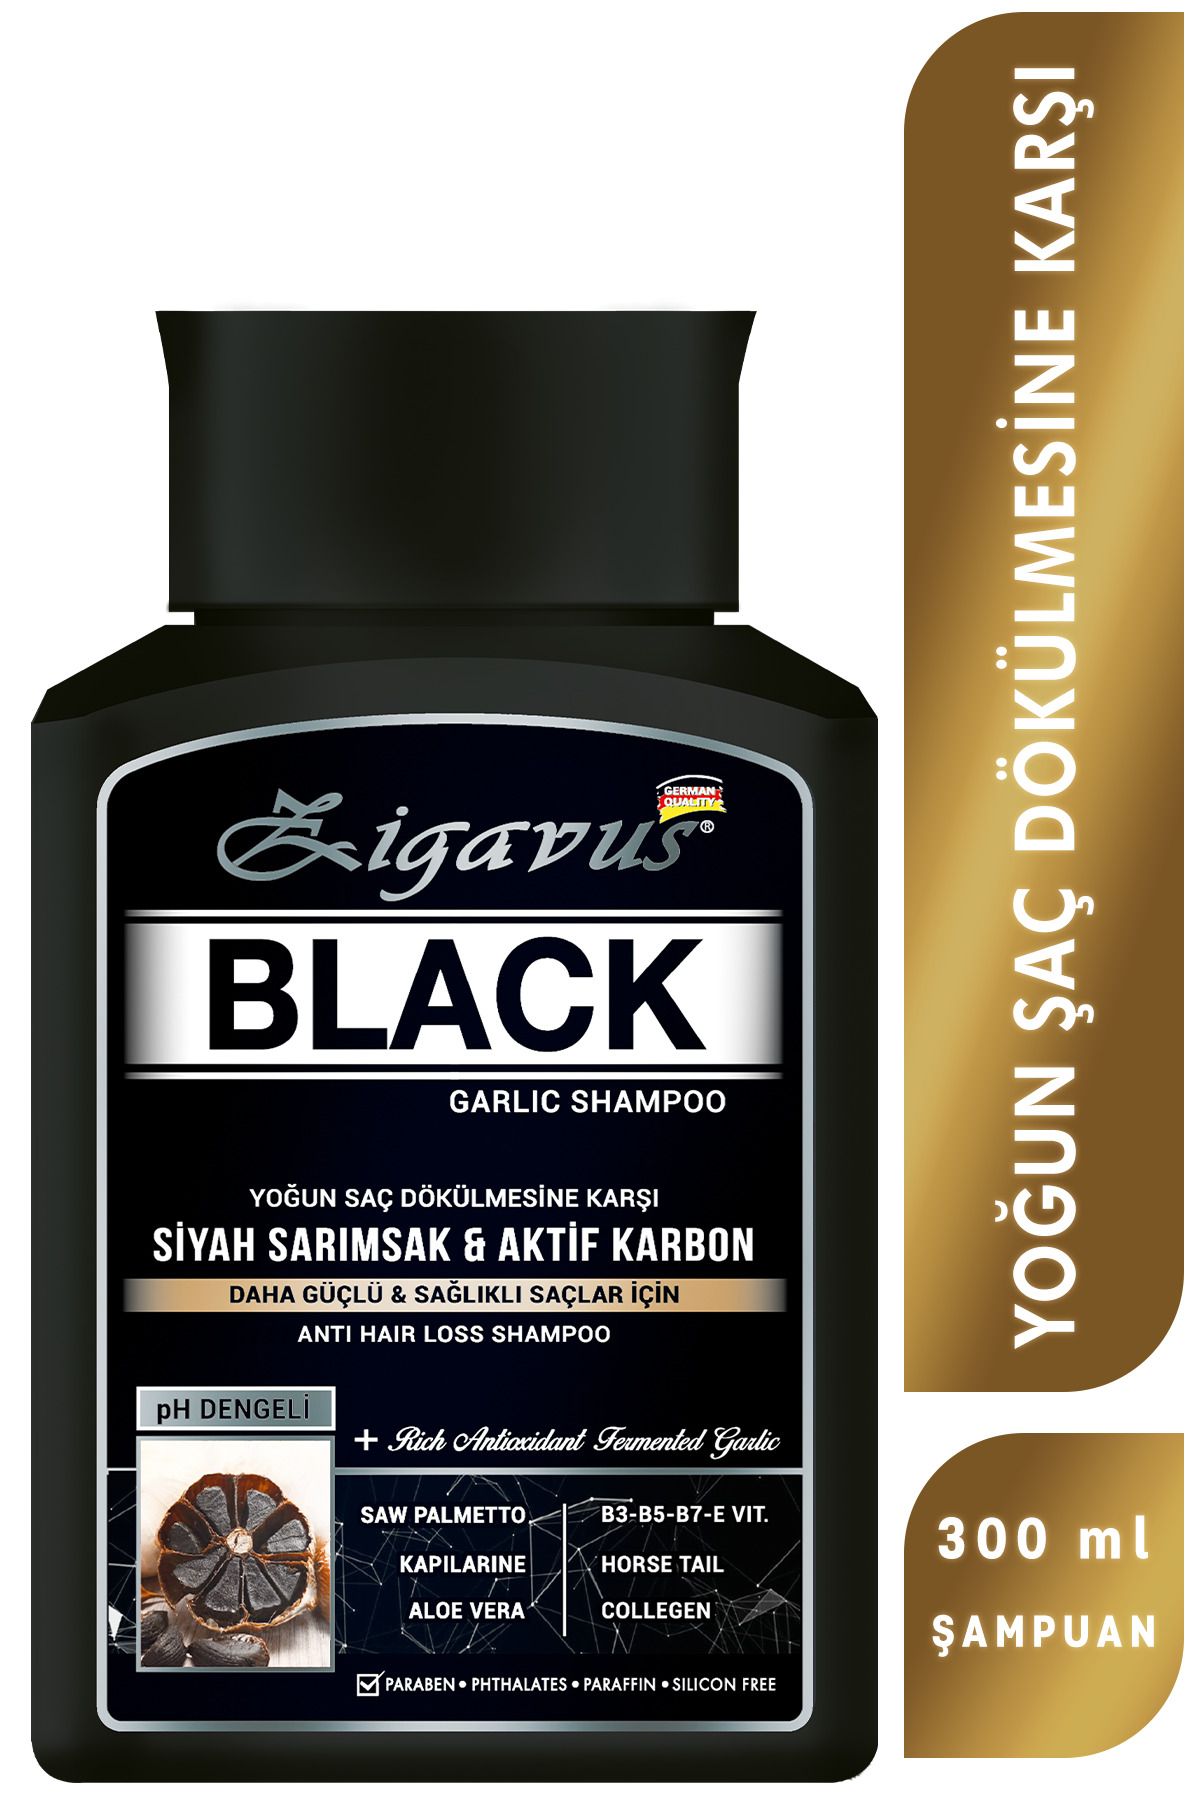 Zigavus Black - Siyah (Kara) Sarımsaklı - Aktif Karbonlu Şampuan 300 ml 8699349130701